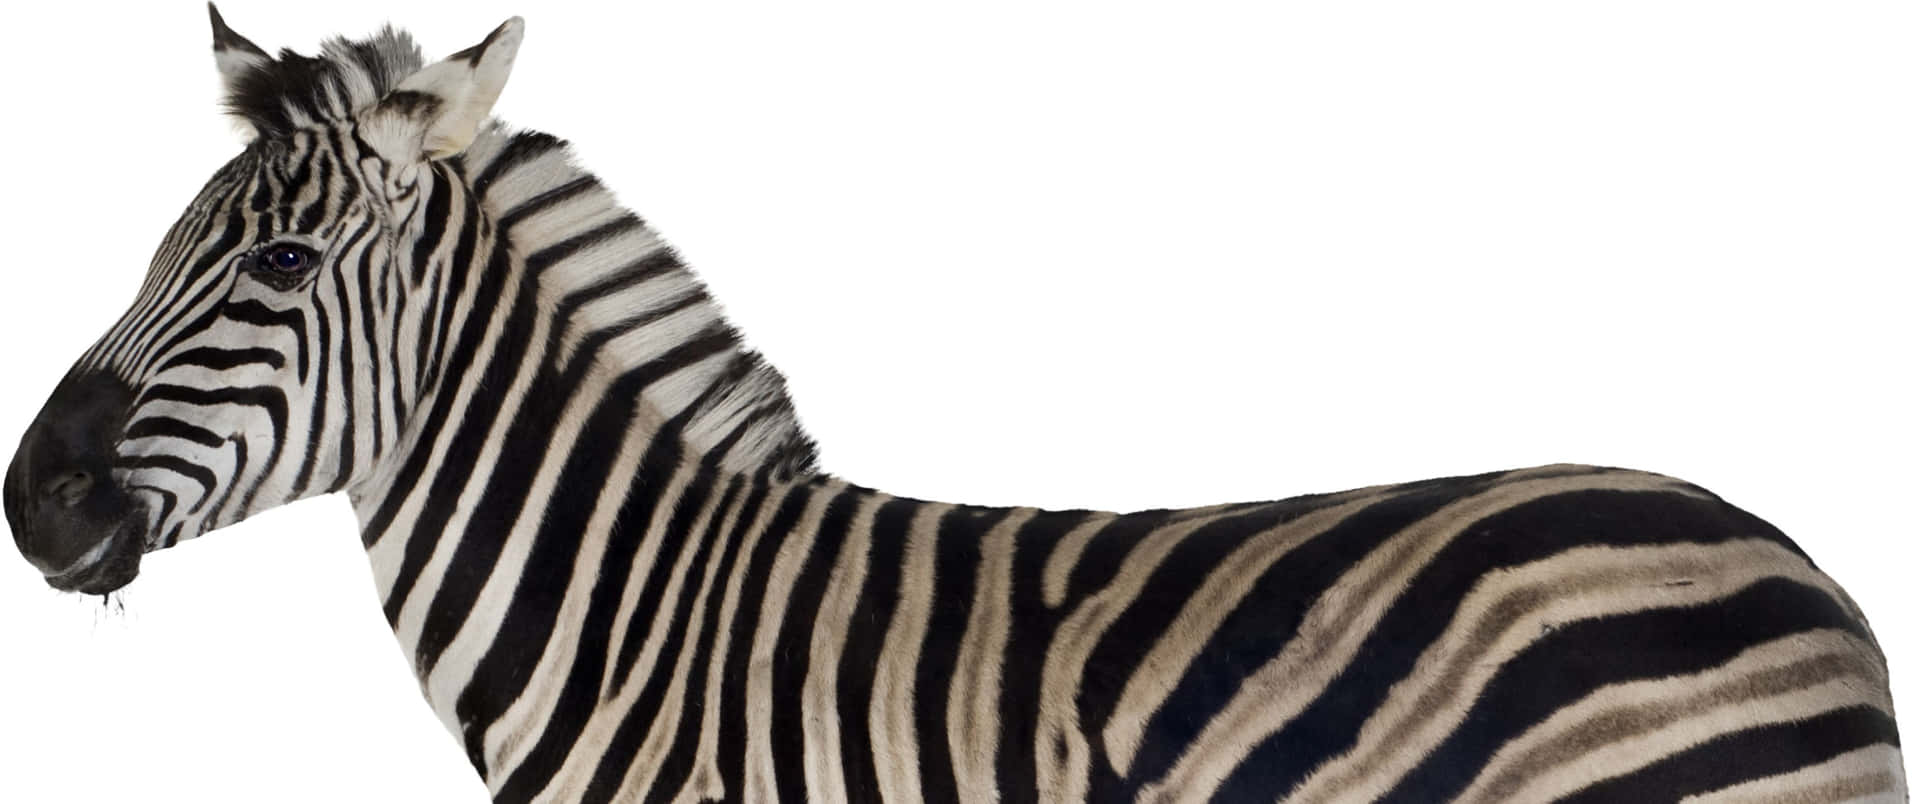 3440x1440 Animal Black And White Zebra Wallpaper